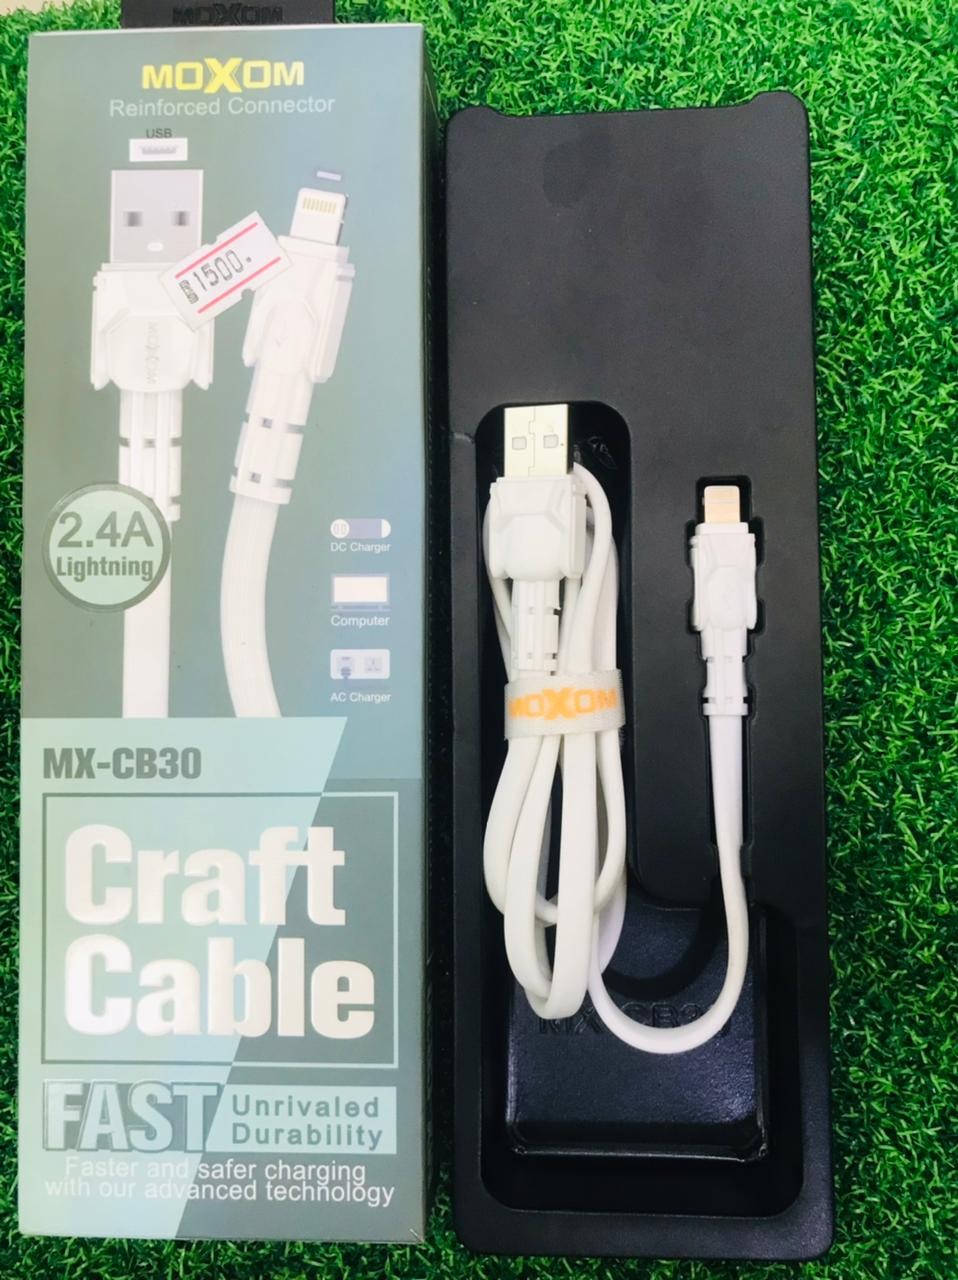 Moxom mxcb30 craft cable